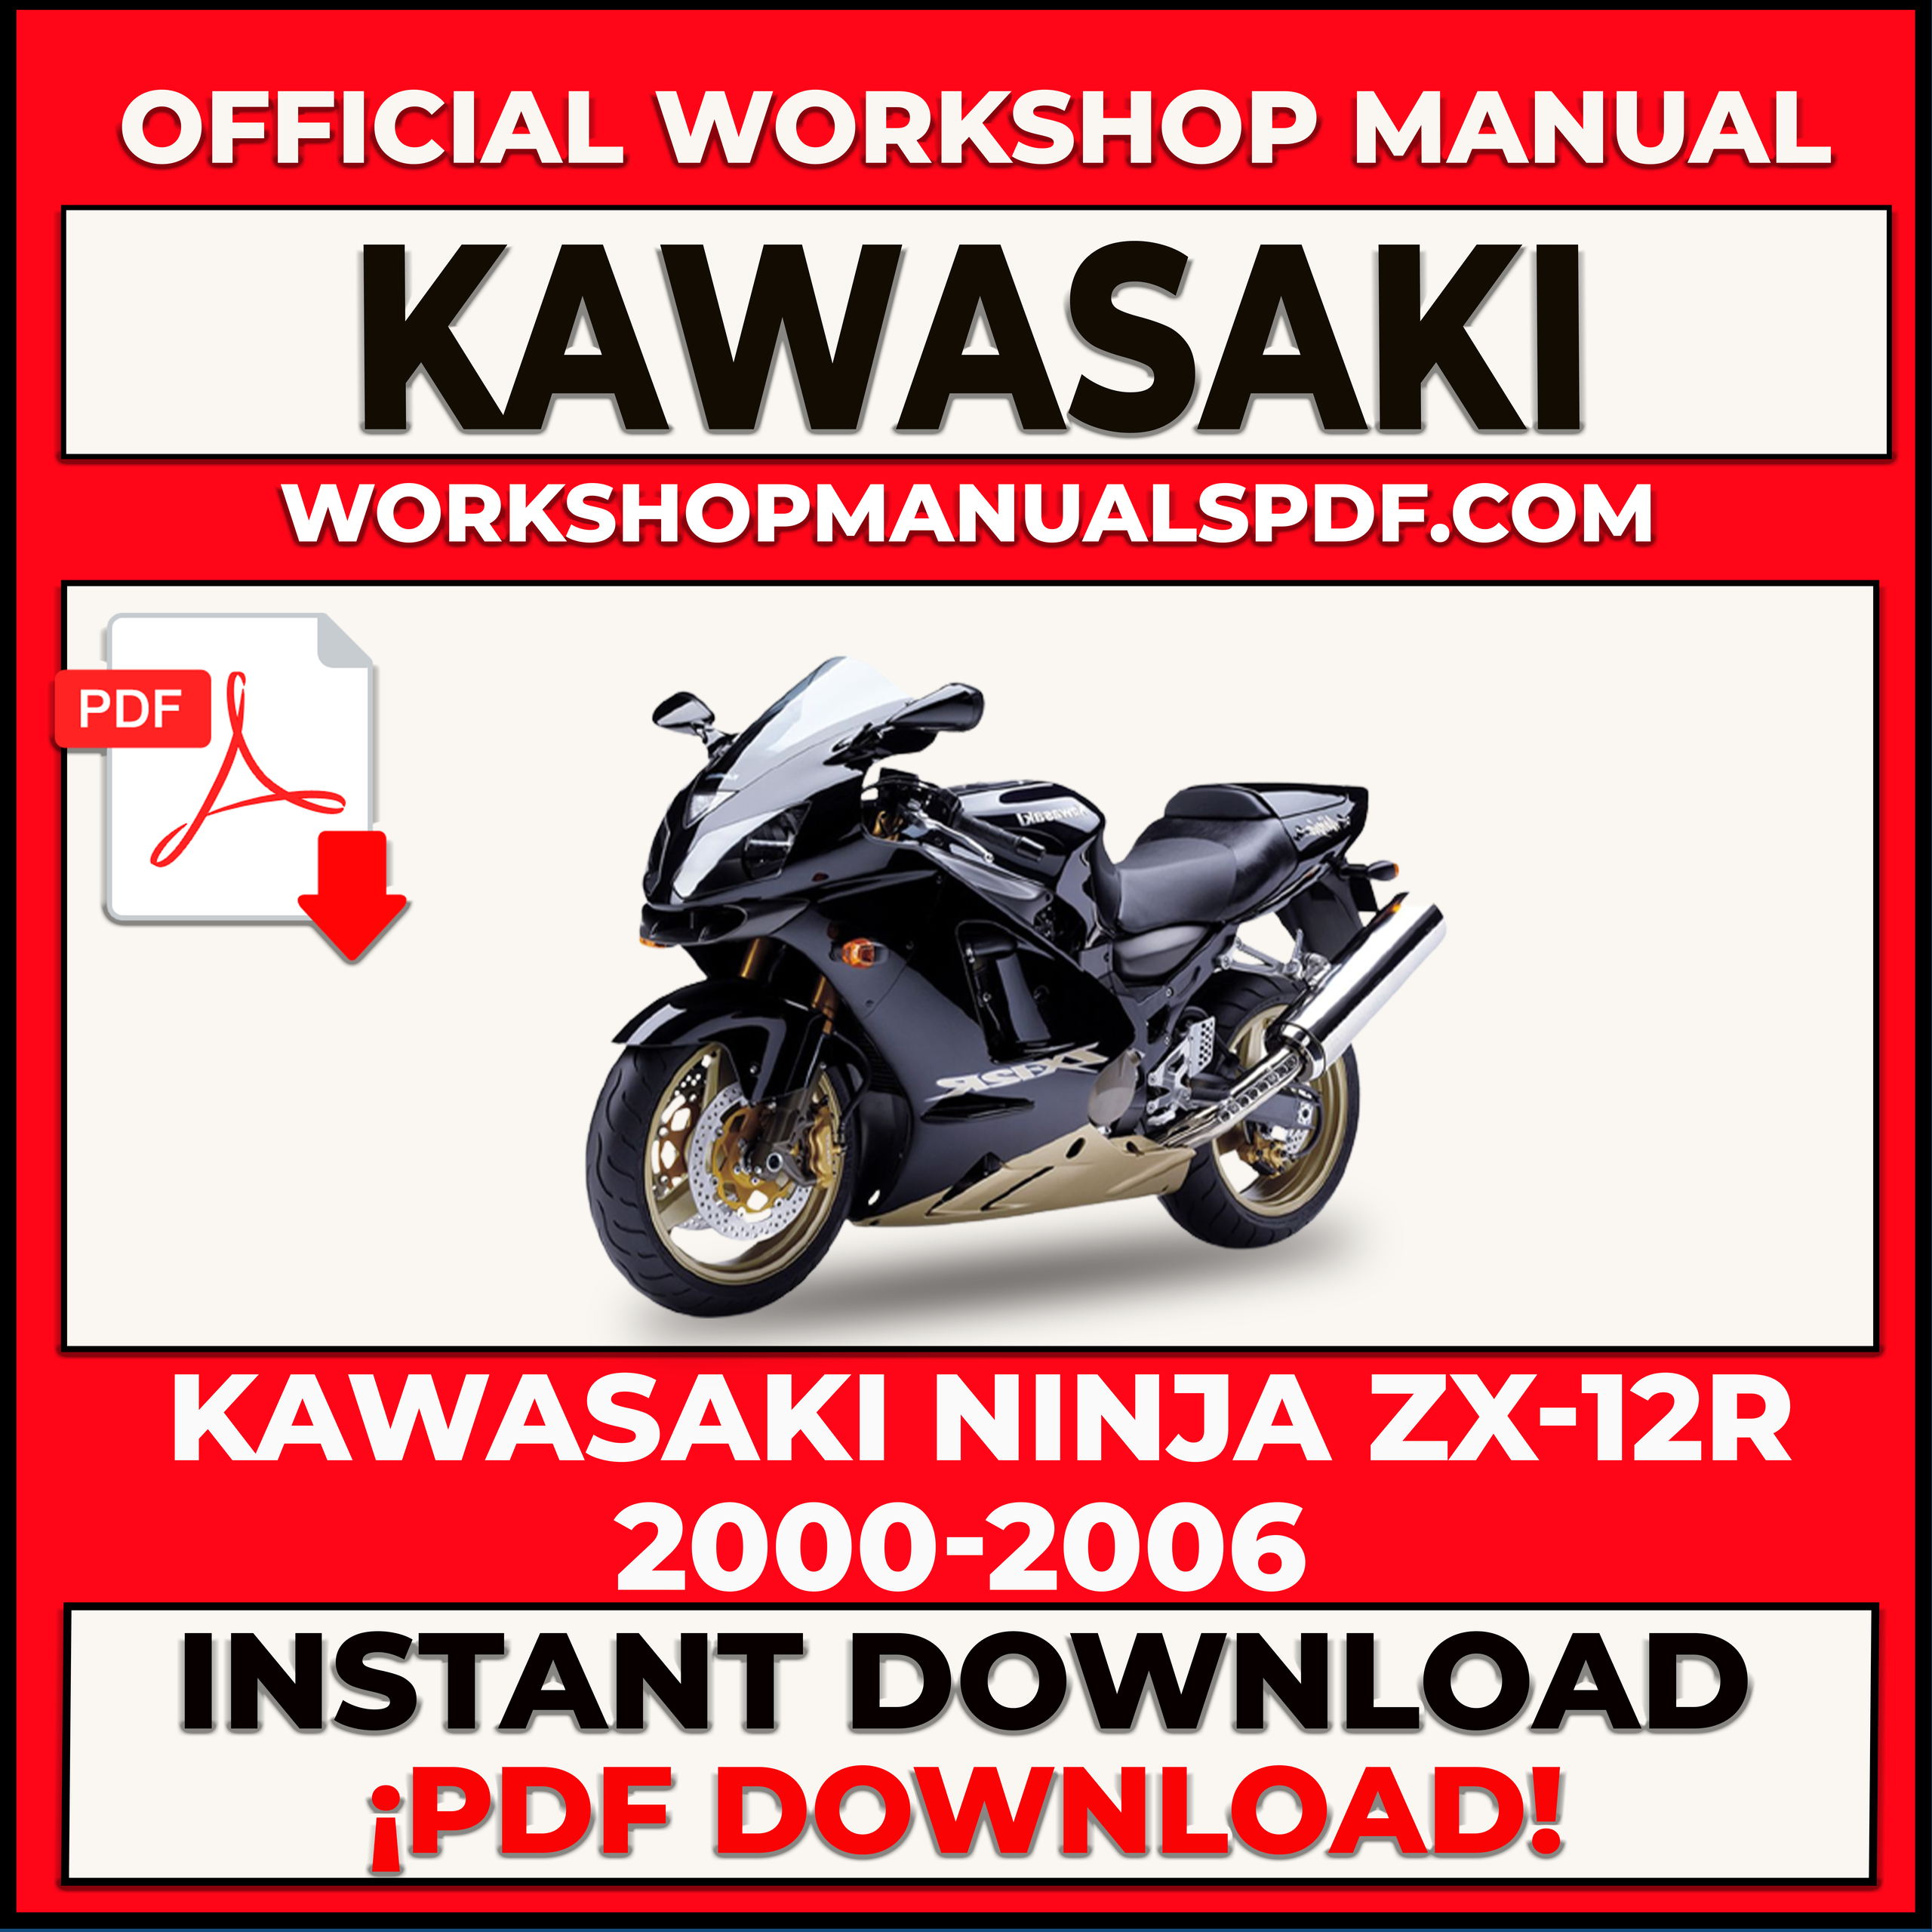 Kawasaki Ninja ZX-12R 2000-2006 Workshop Repair Service Manual PDF